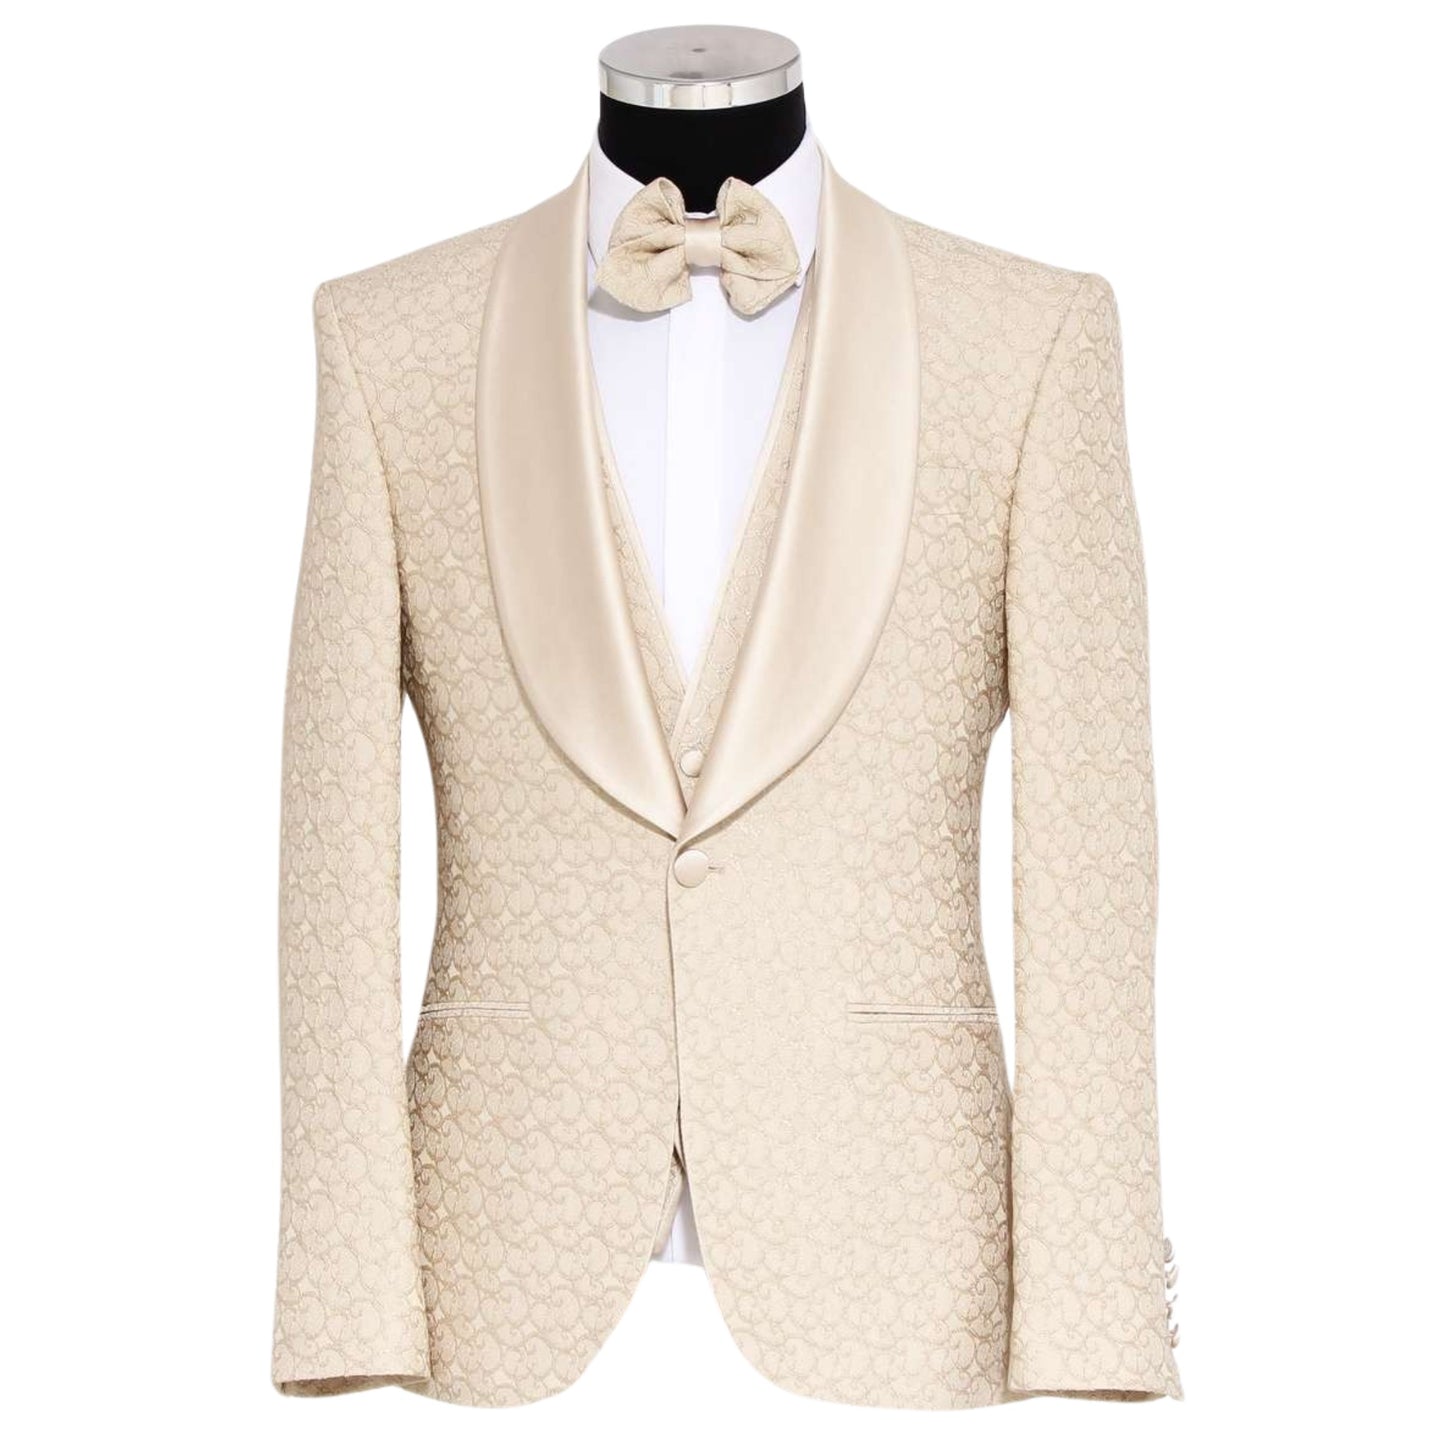 Cream Design Three-Piece Tuxedo, Satin Cream Lapel, Stain Trimming on Pockets, Cream Design Vest with Satin Trim, Satin Cream Pants, Satin Cream Buttons, Elegant Men's Formal Wear, Made in Turkey.